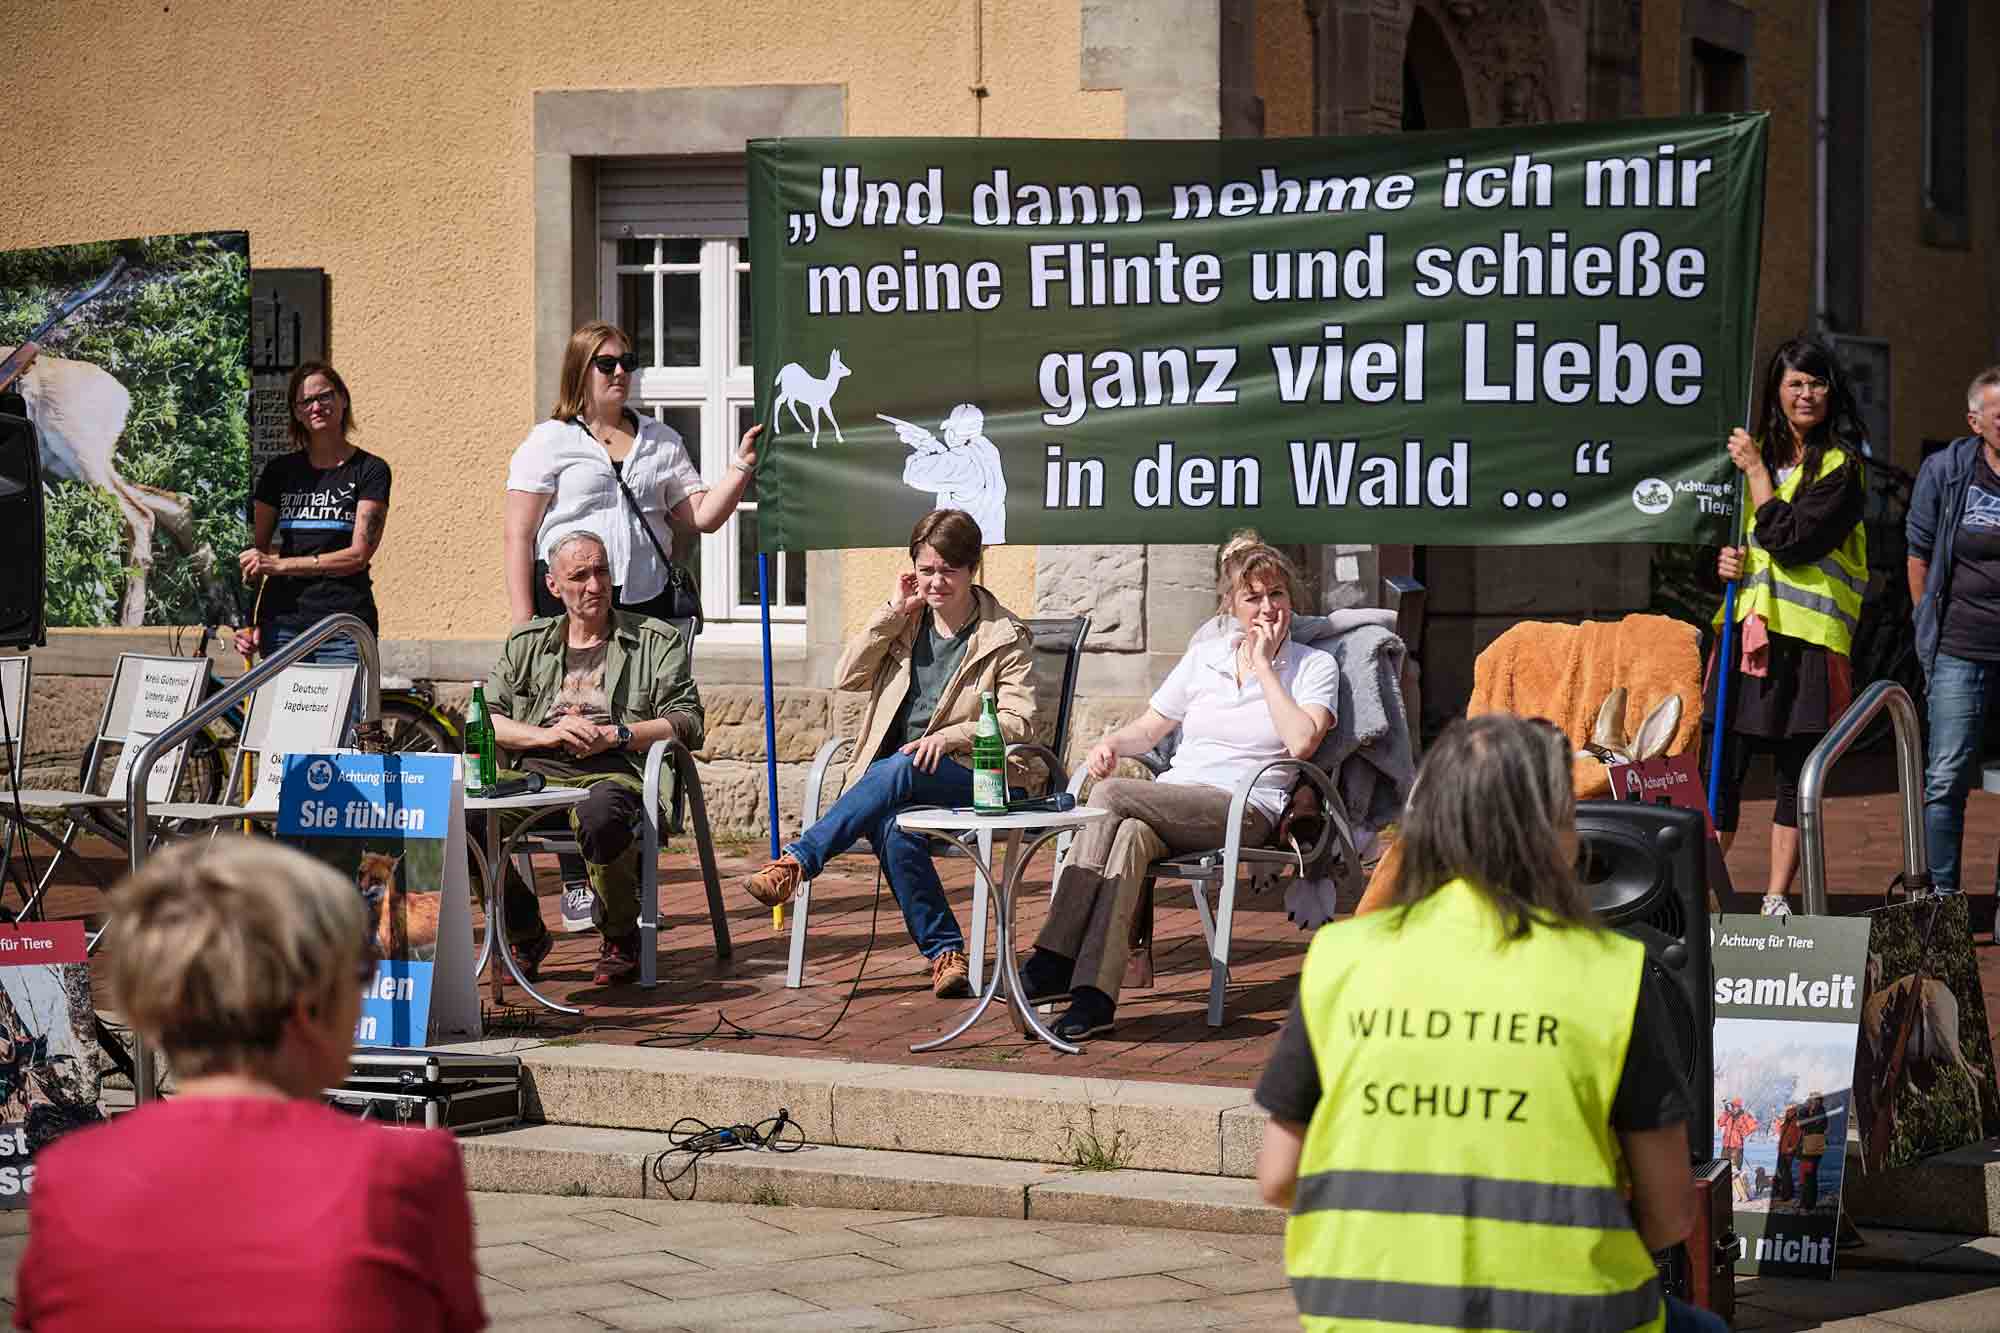 Gütersloh, Achtung für Tiere: Jagd gehört abgeschafft! Eindrucksvoller Protest gegen Jagd